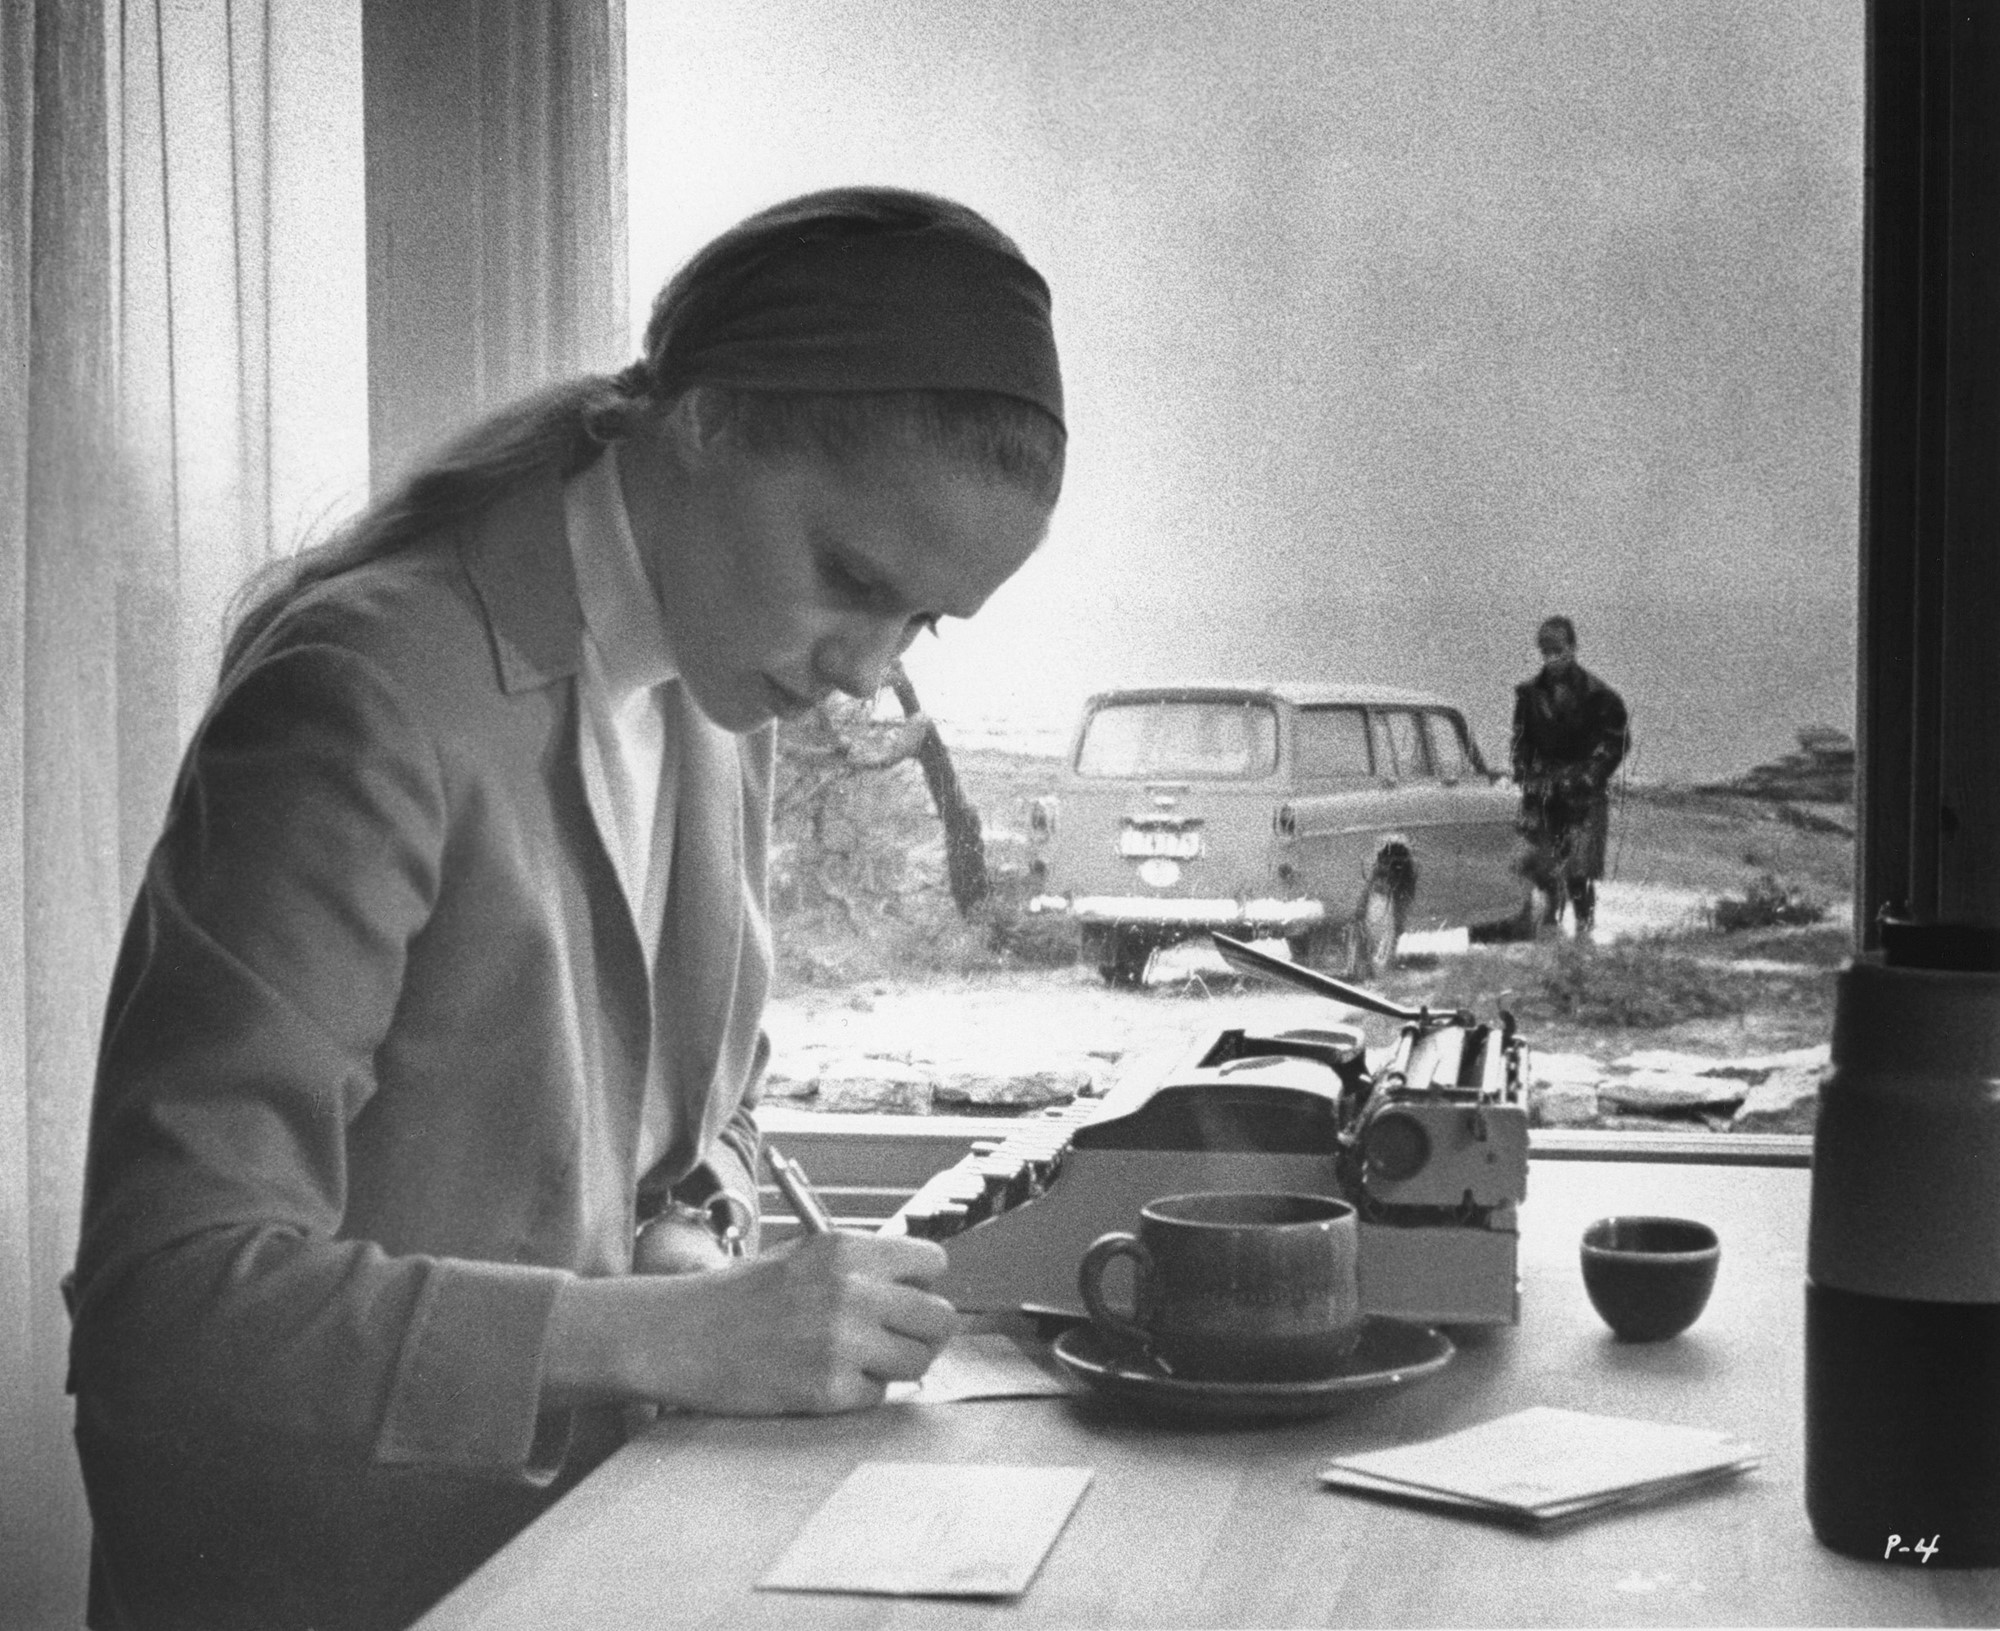 Eretiki Ανάλυση-Αφιέρωμα της ταινίας “Persona” του Ingmar Bergman